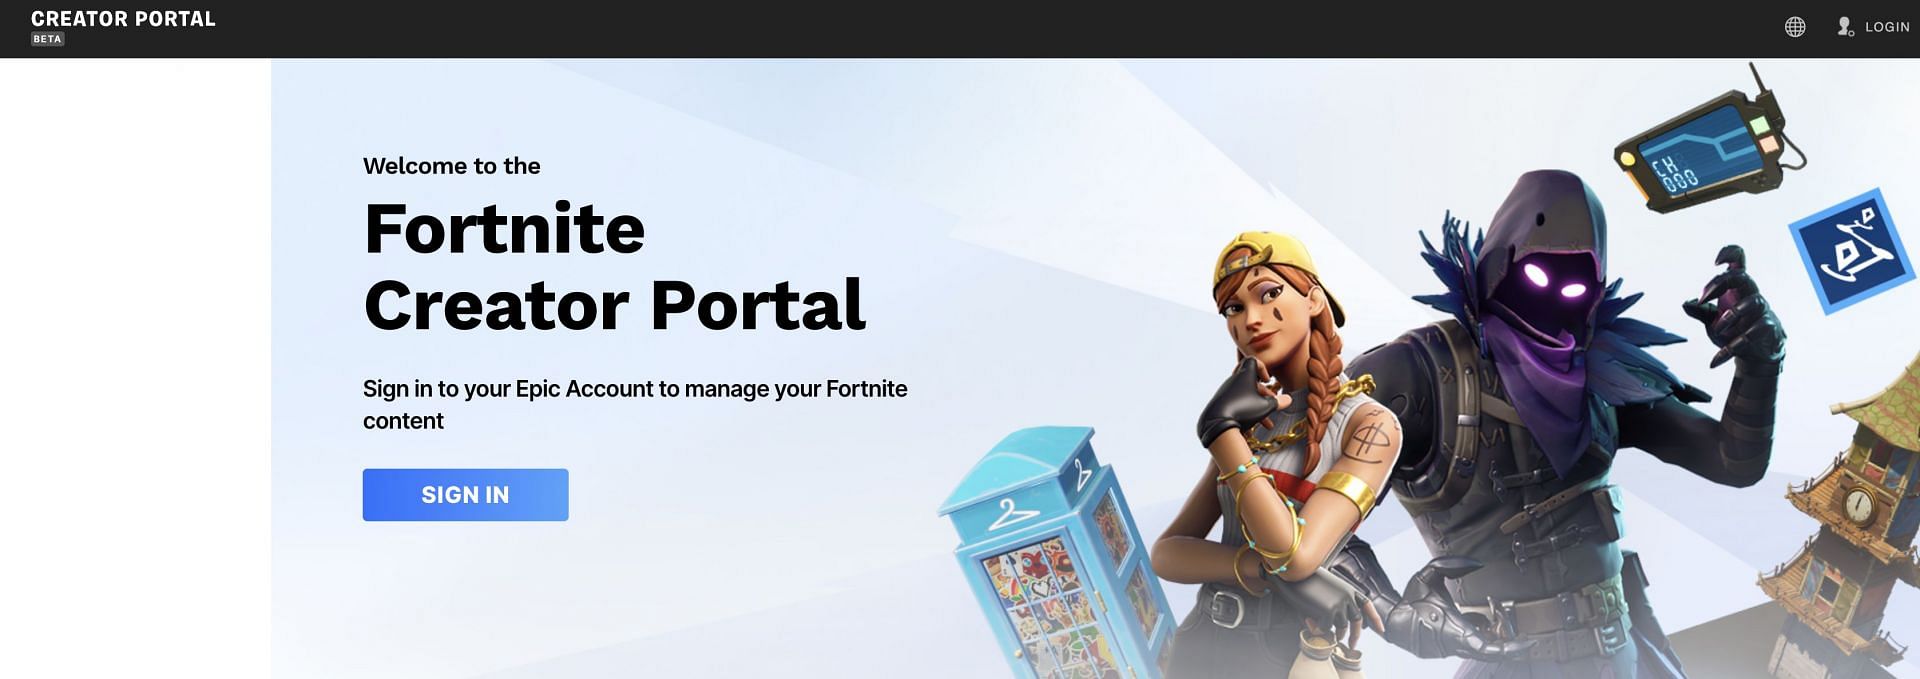 Fortnite Creator Portal